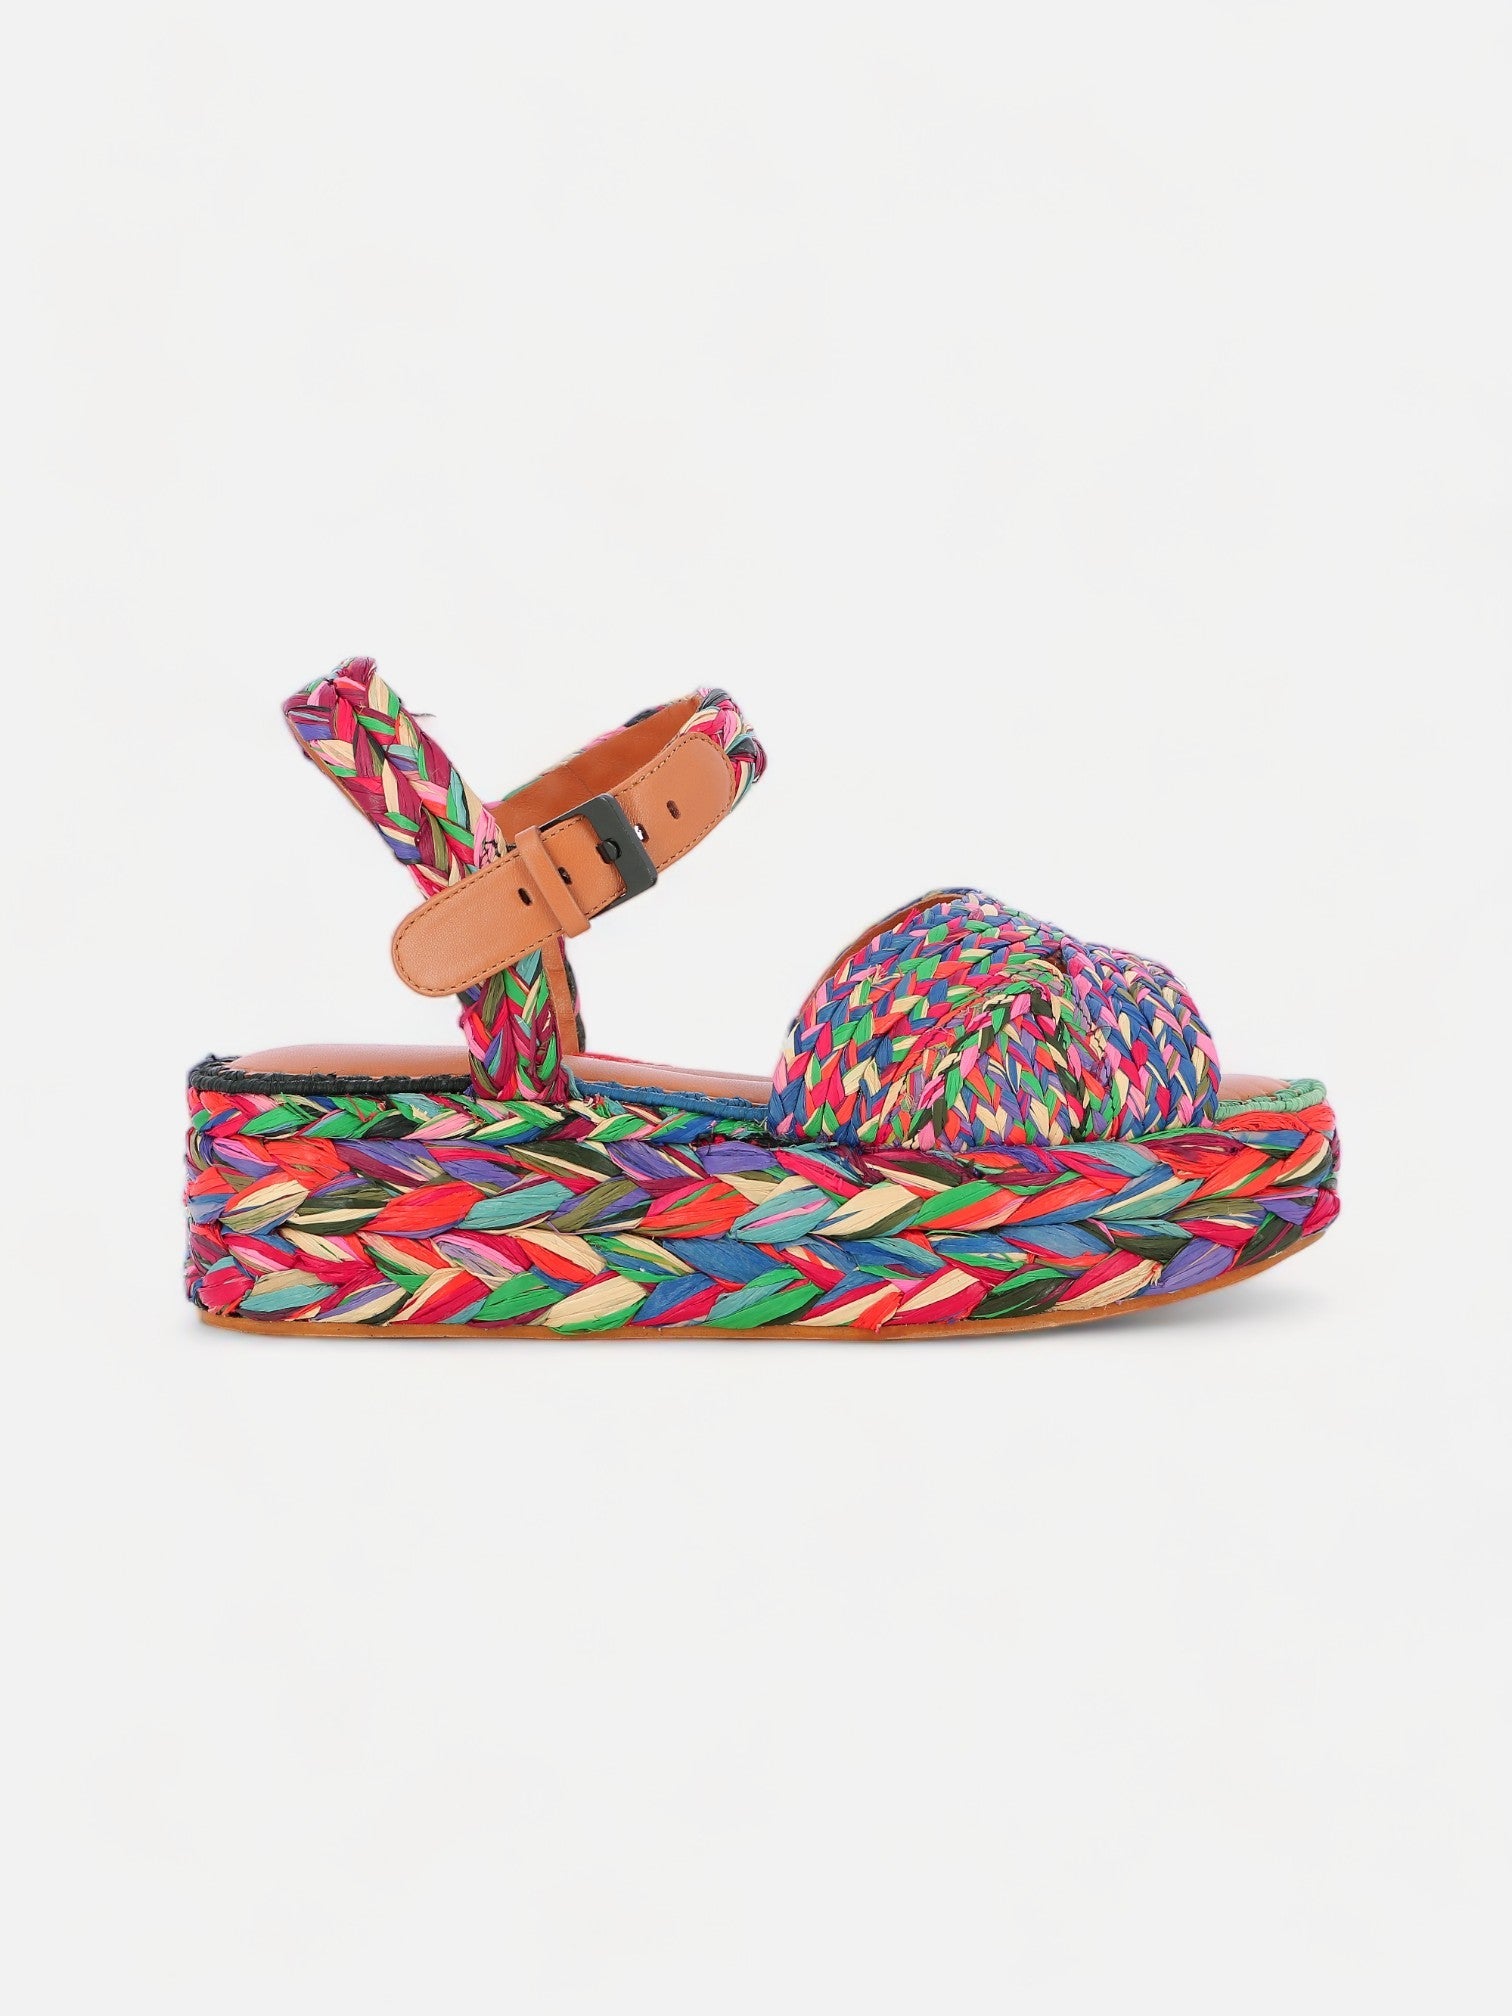 SANDALS - AIDA sandals, multicolor raffia - Clergerie Paris - USA